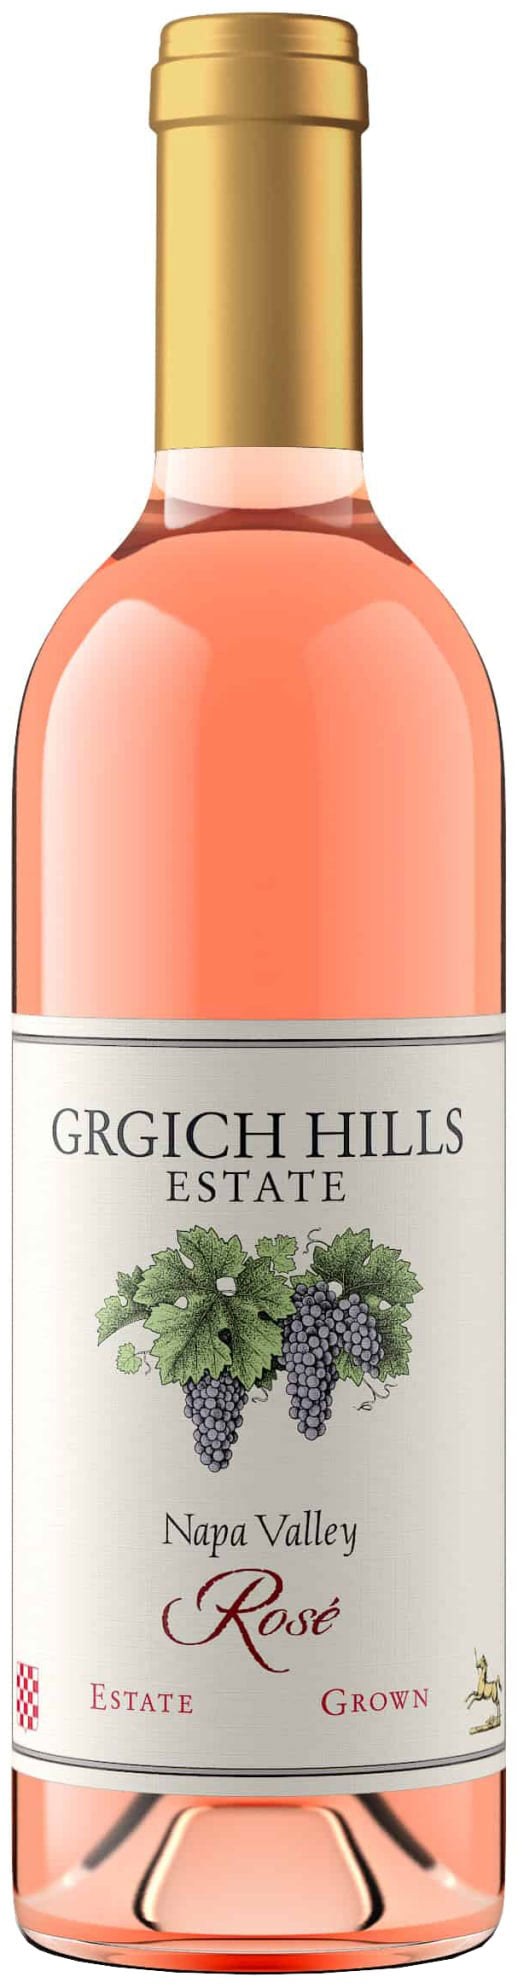 Grgich Hills Rose 2019